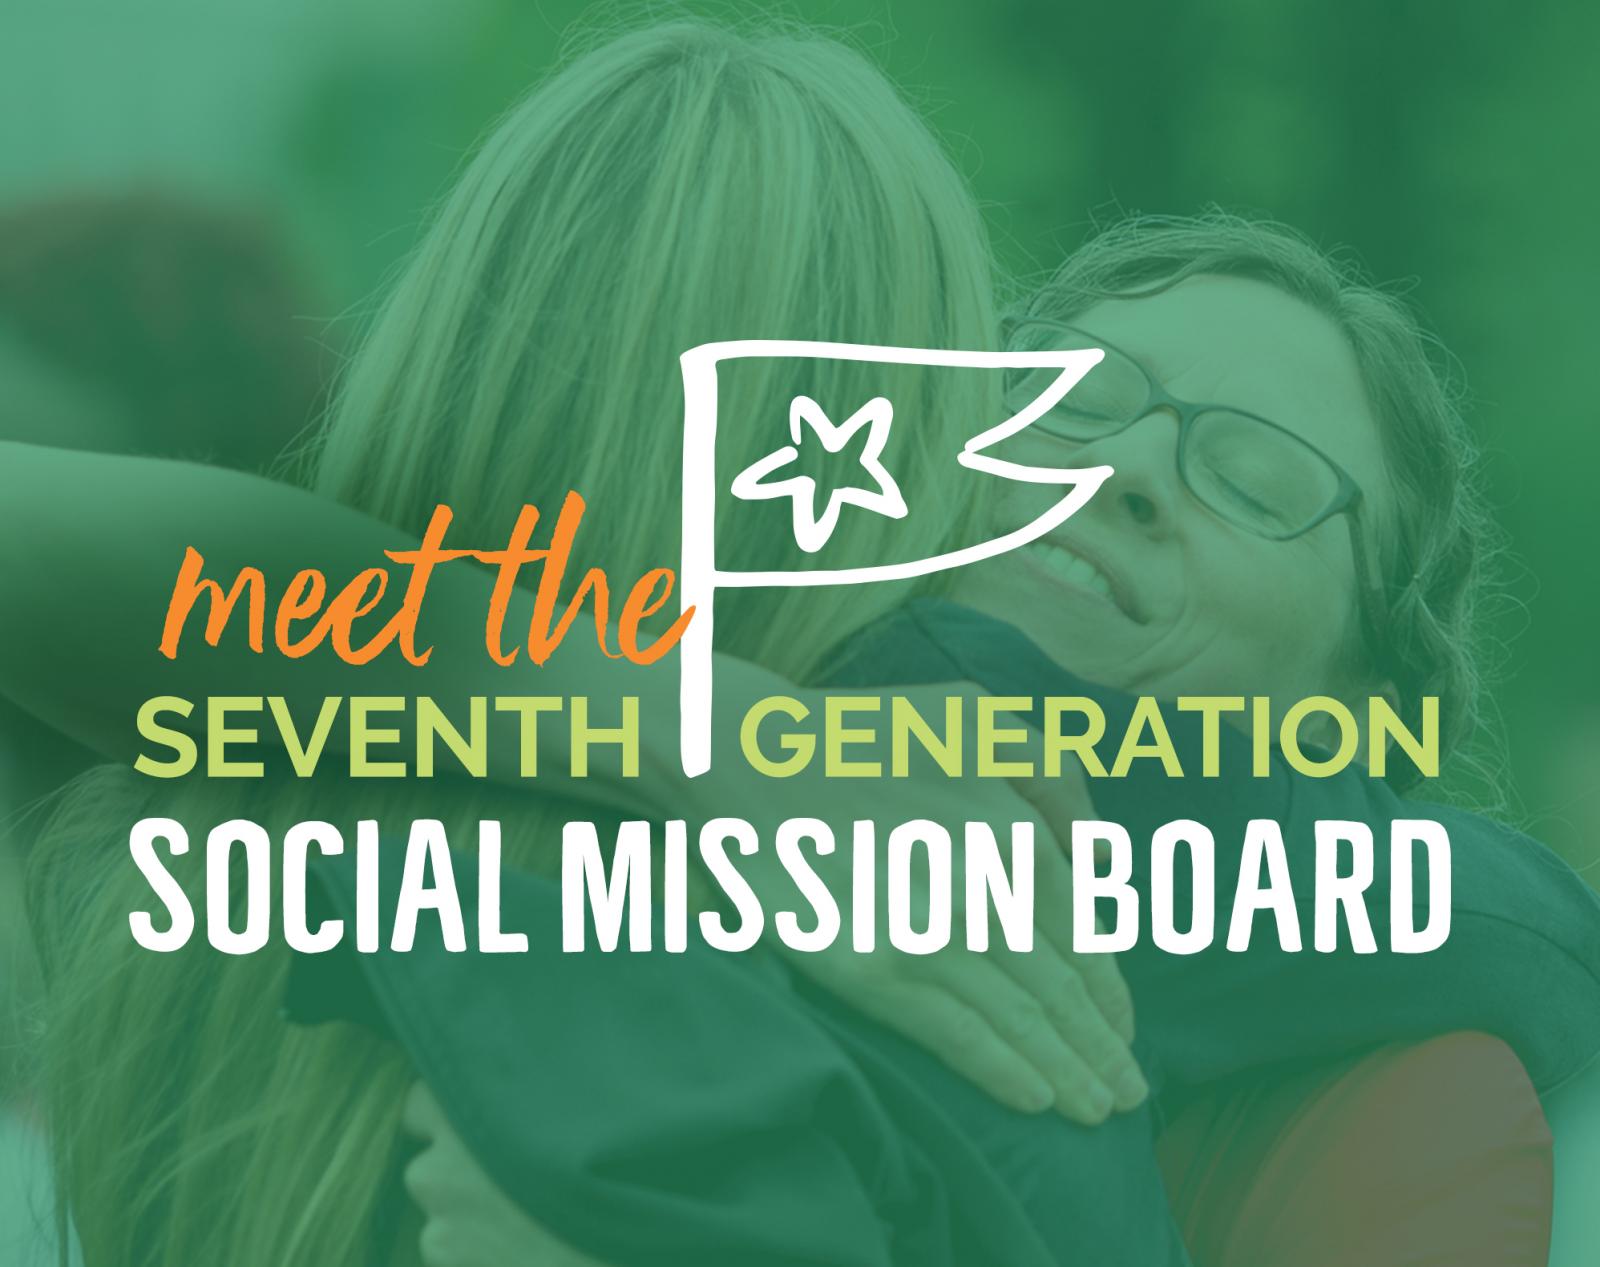 Seventh Generation Social Mission Board